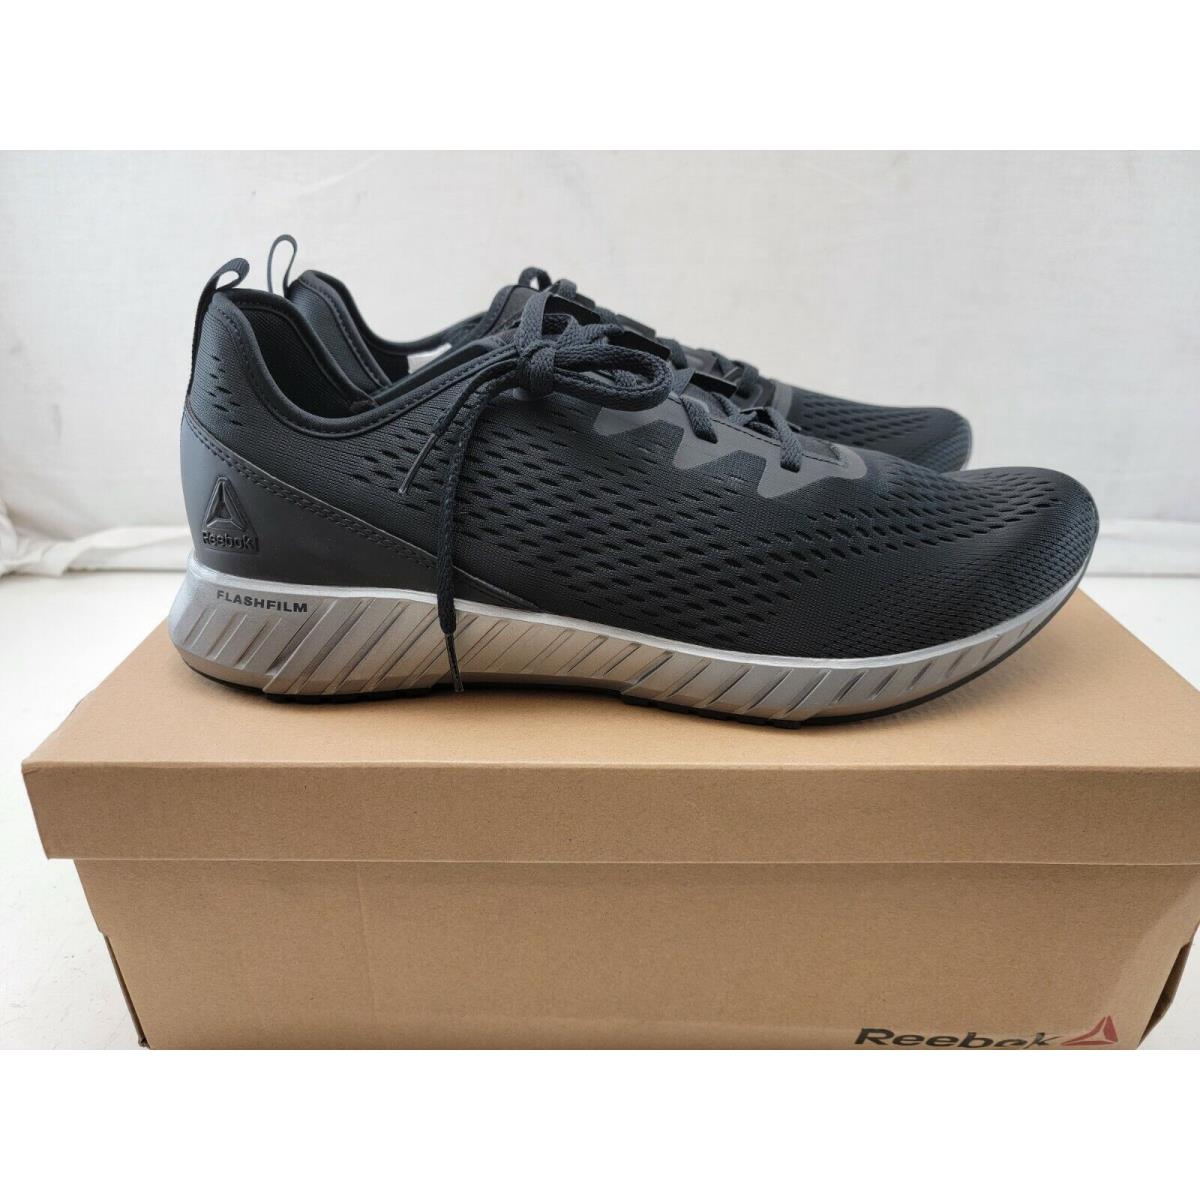 Reebok Flashfilm Black/gray Running Shoes For Men DV6968 - Size 13